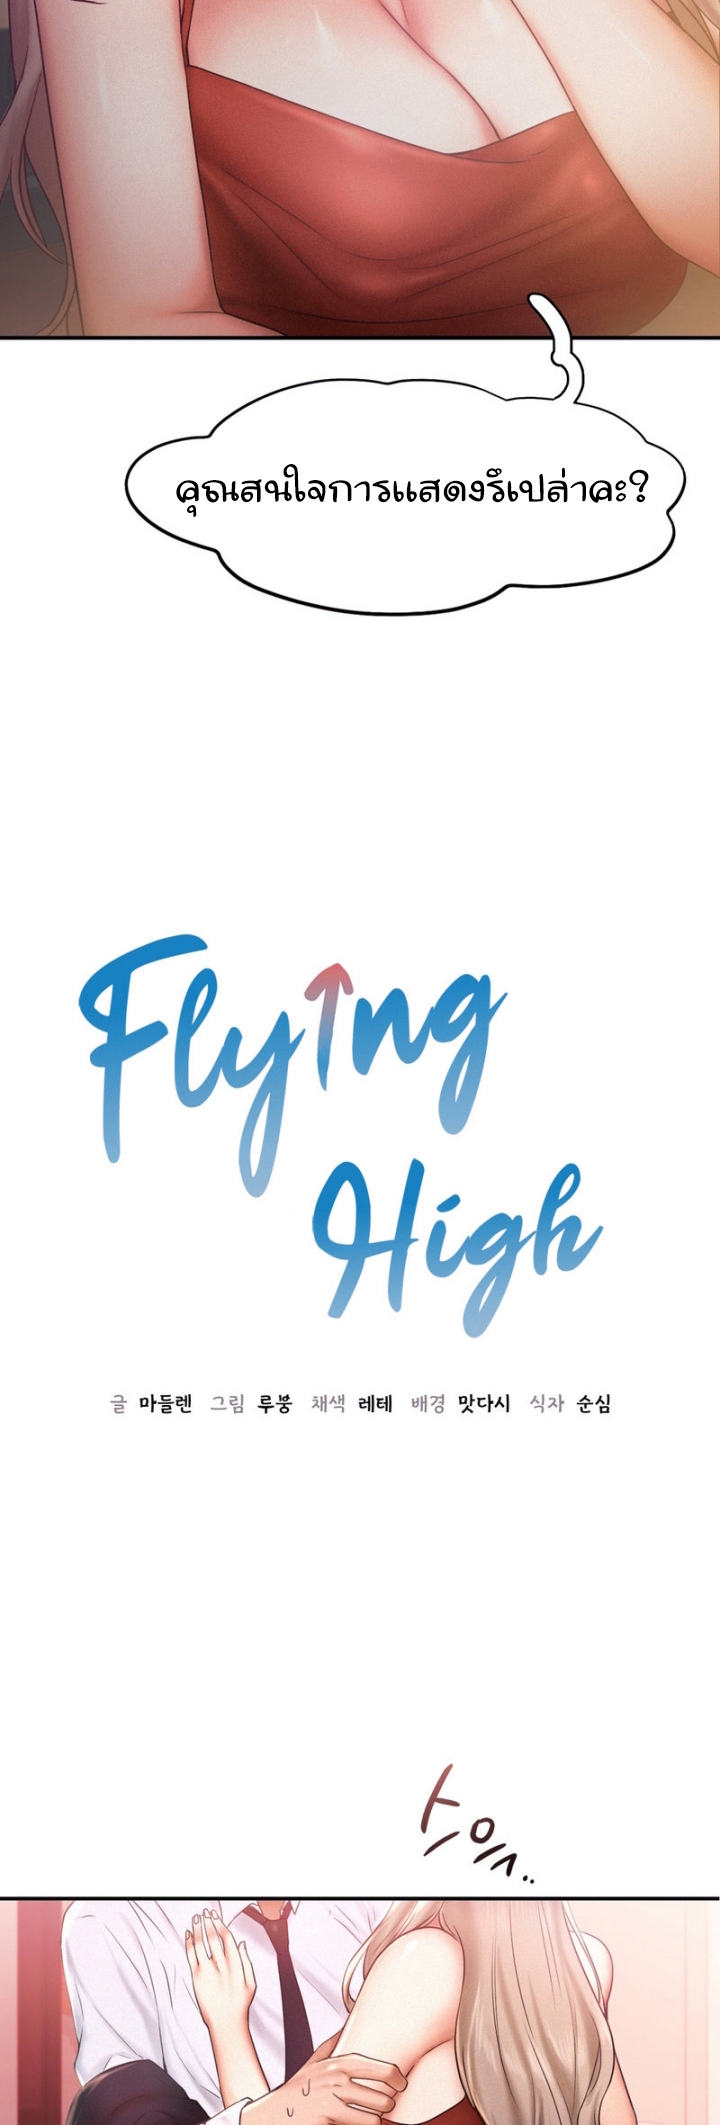 Flying High 15 03